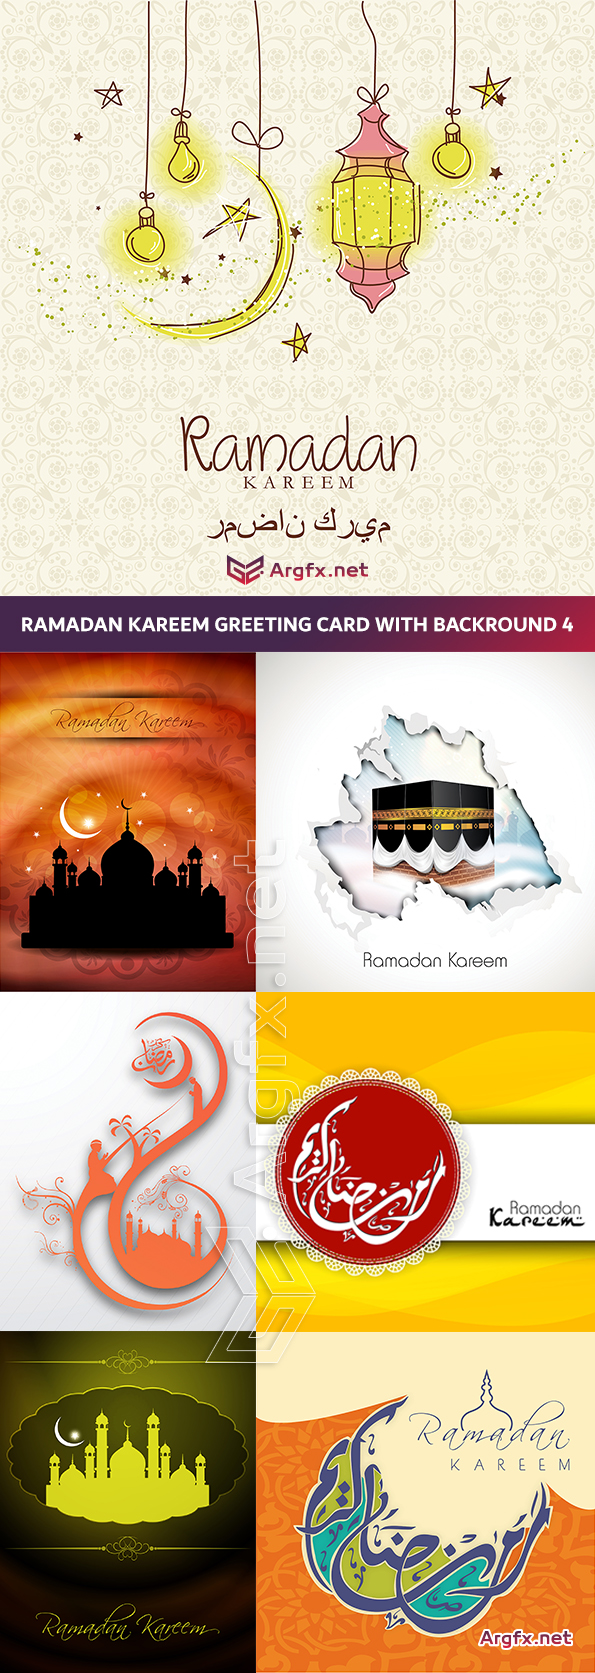 Stock Vector - Ramadan Kareem greeting card with backround 4